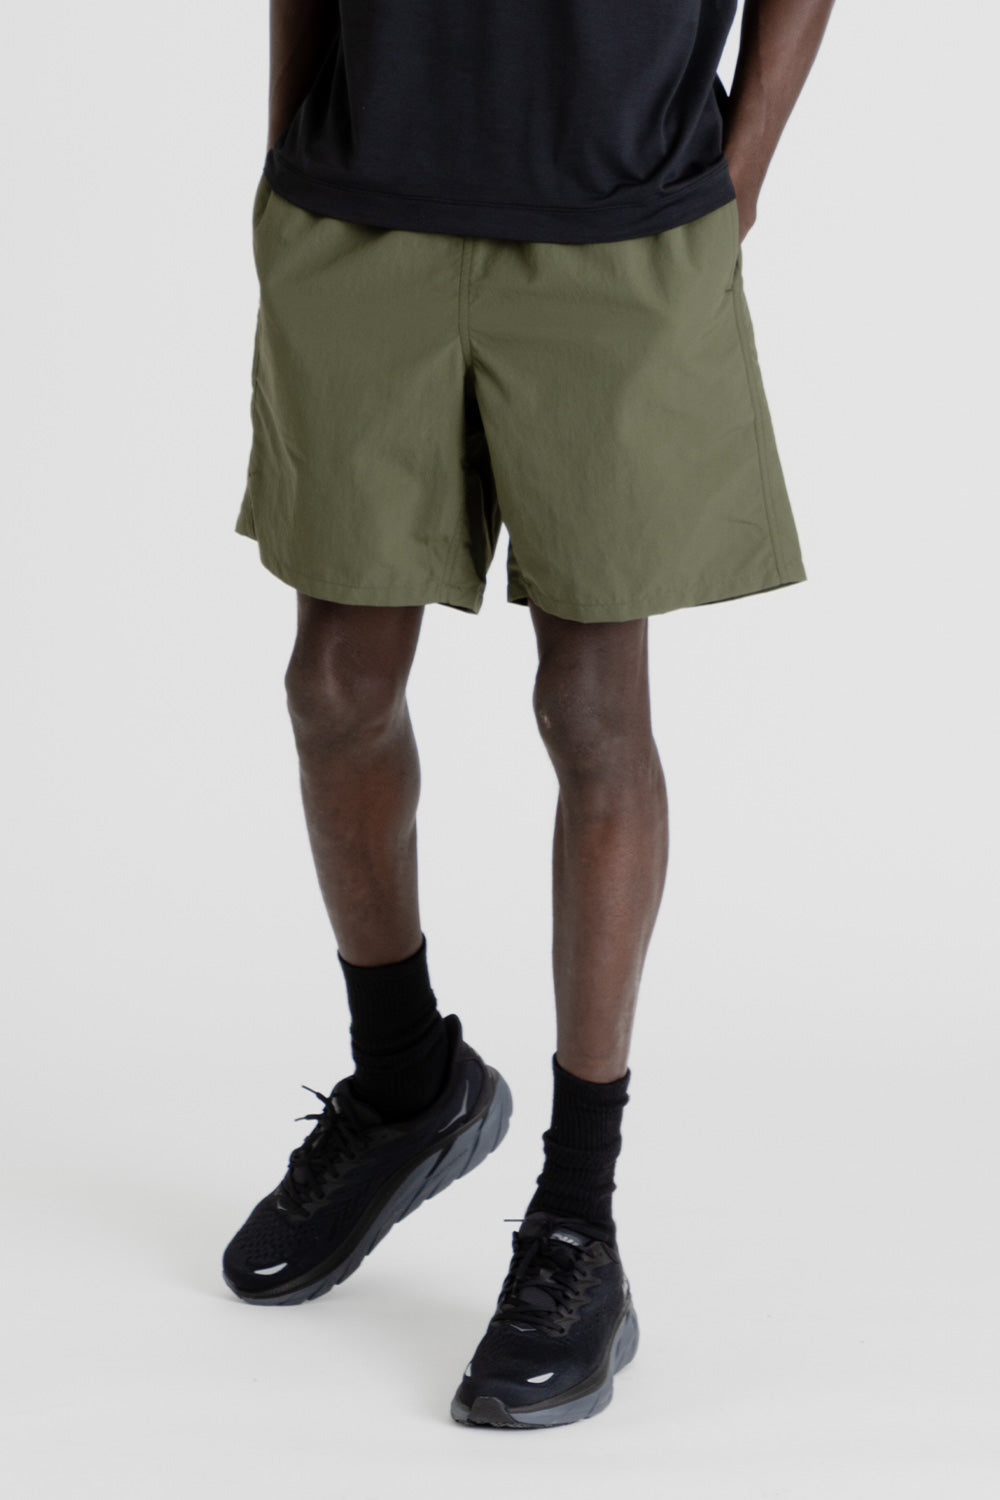 goldwin-nylon-shorts-7-inches-olive-green